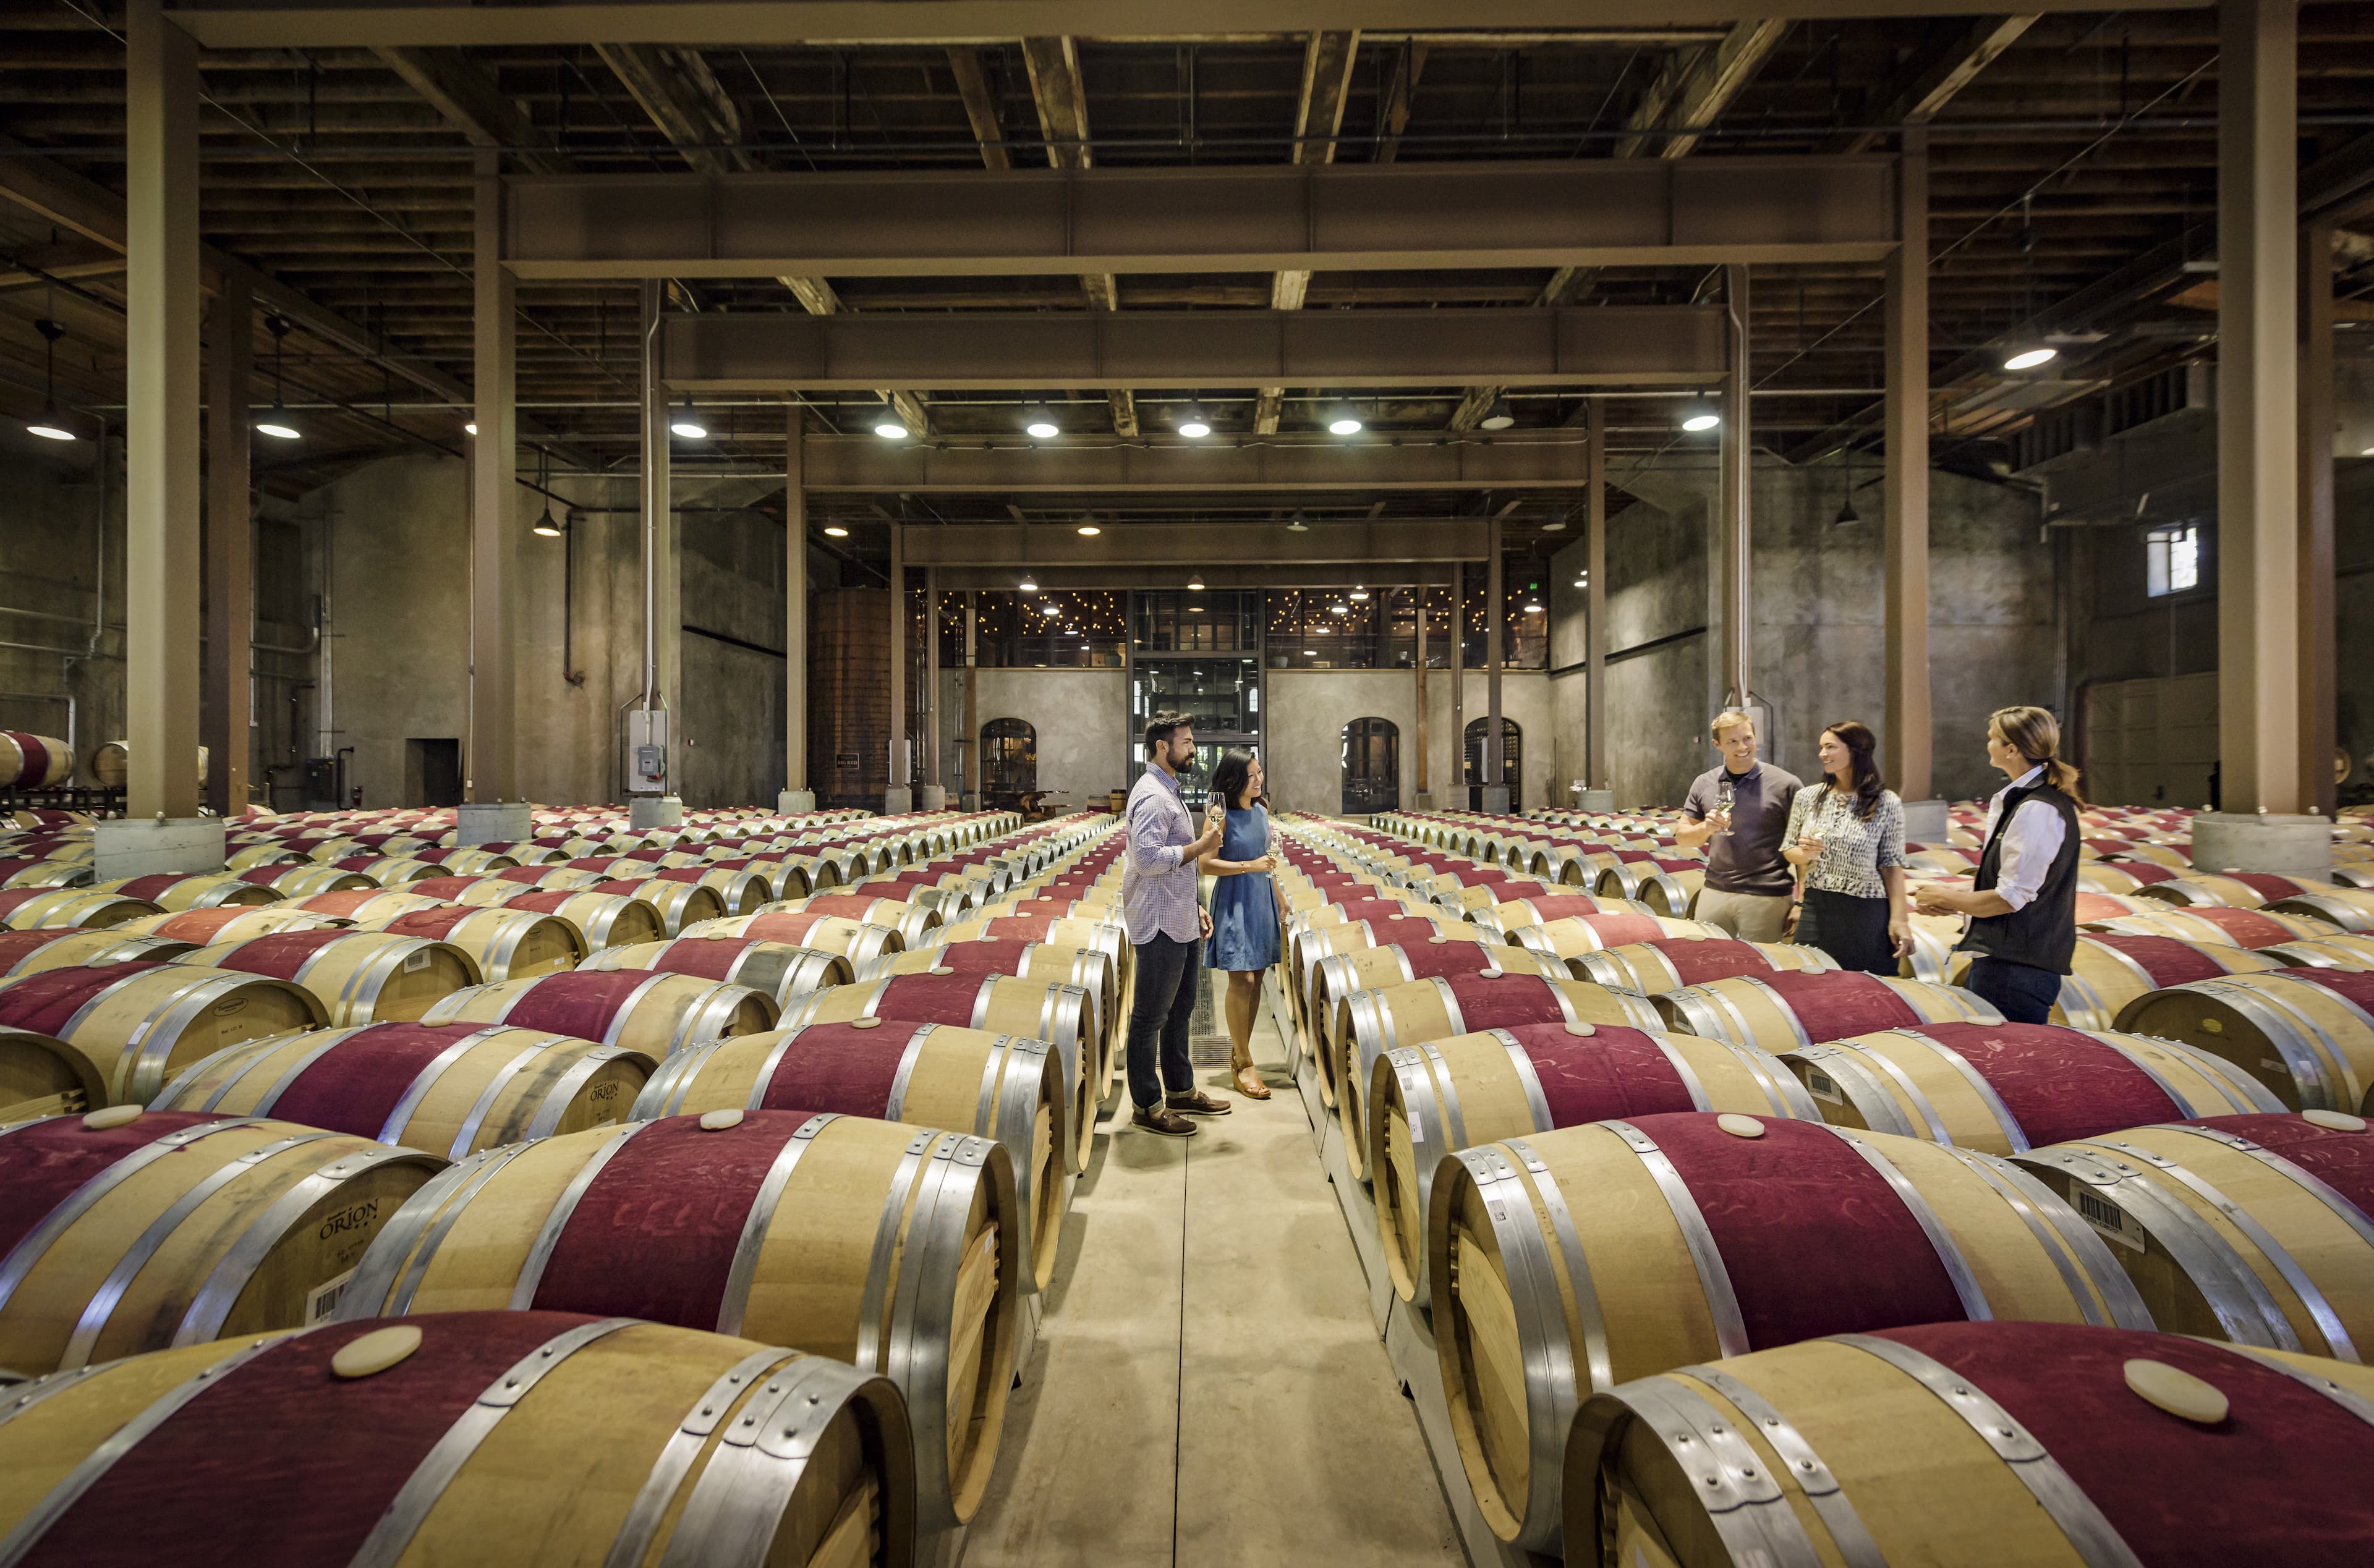 wine barrels lining warehouse floor